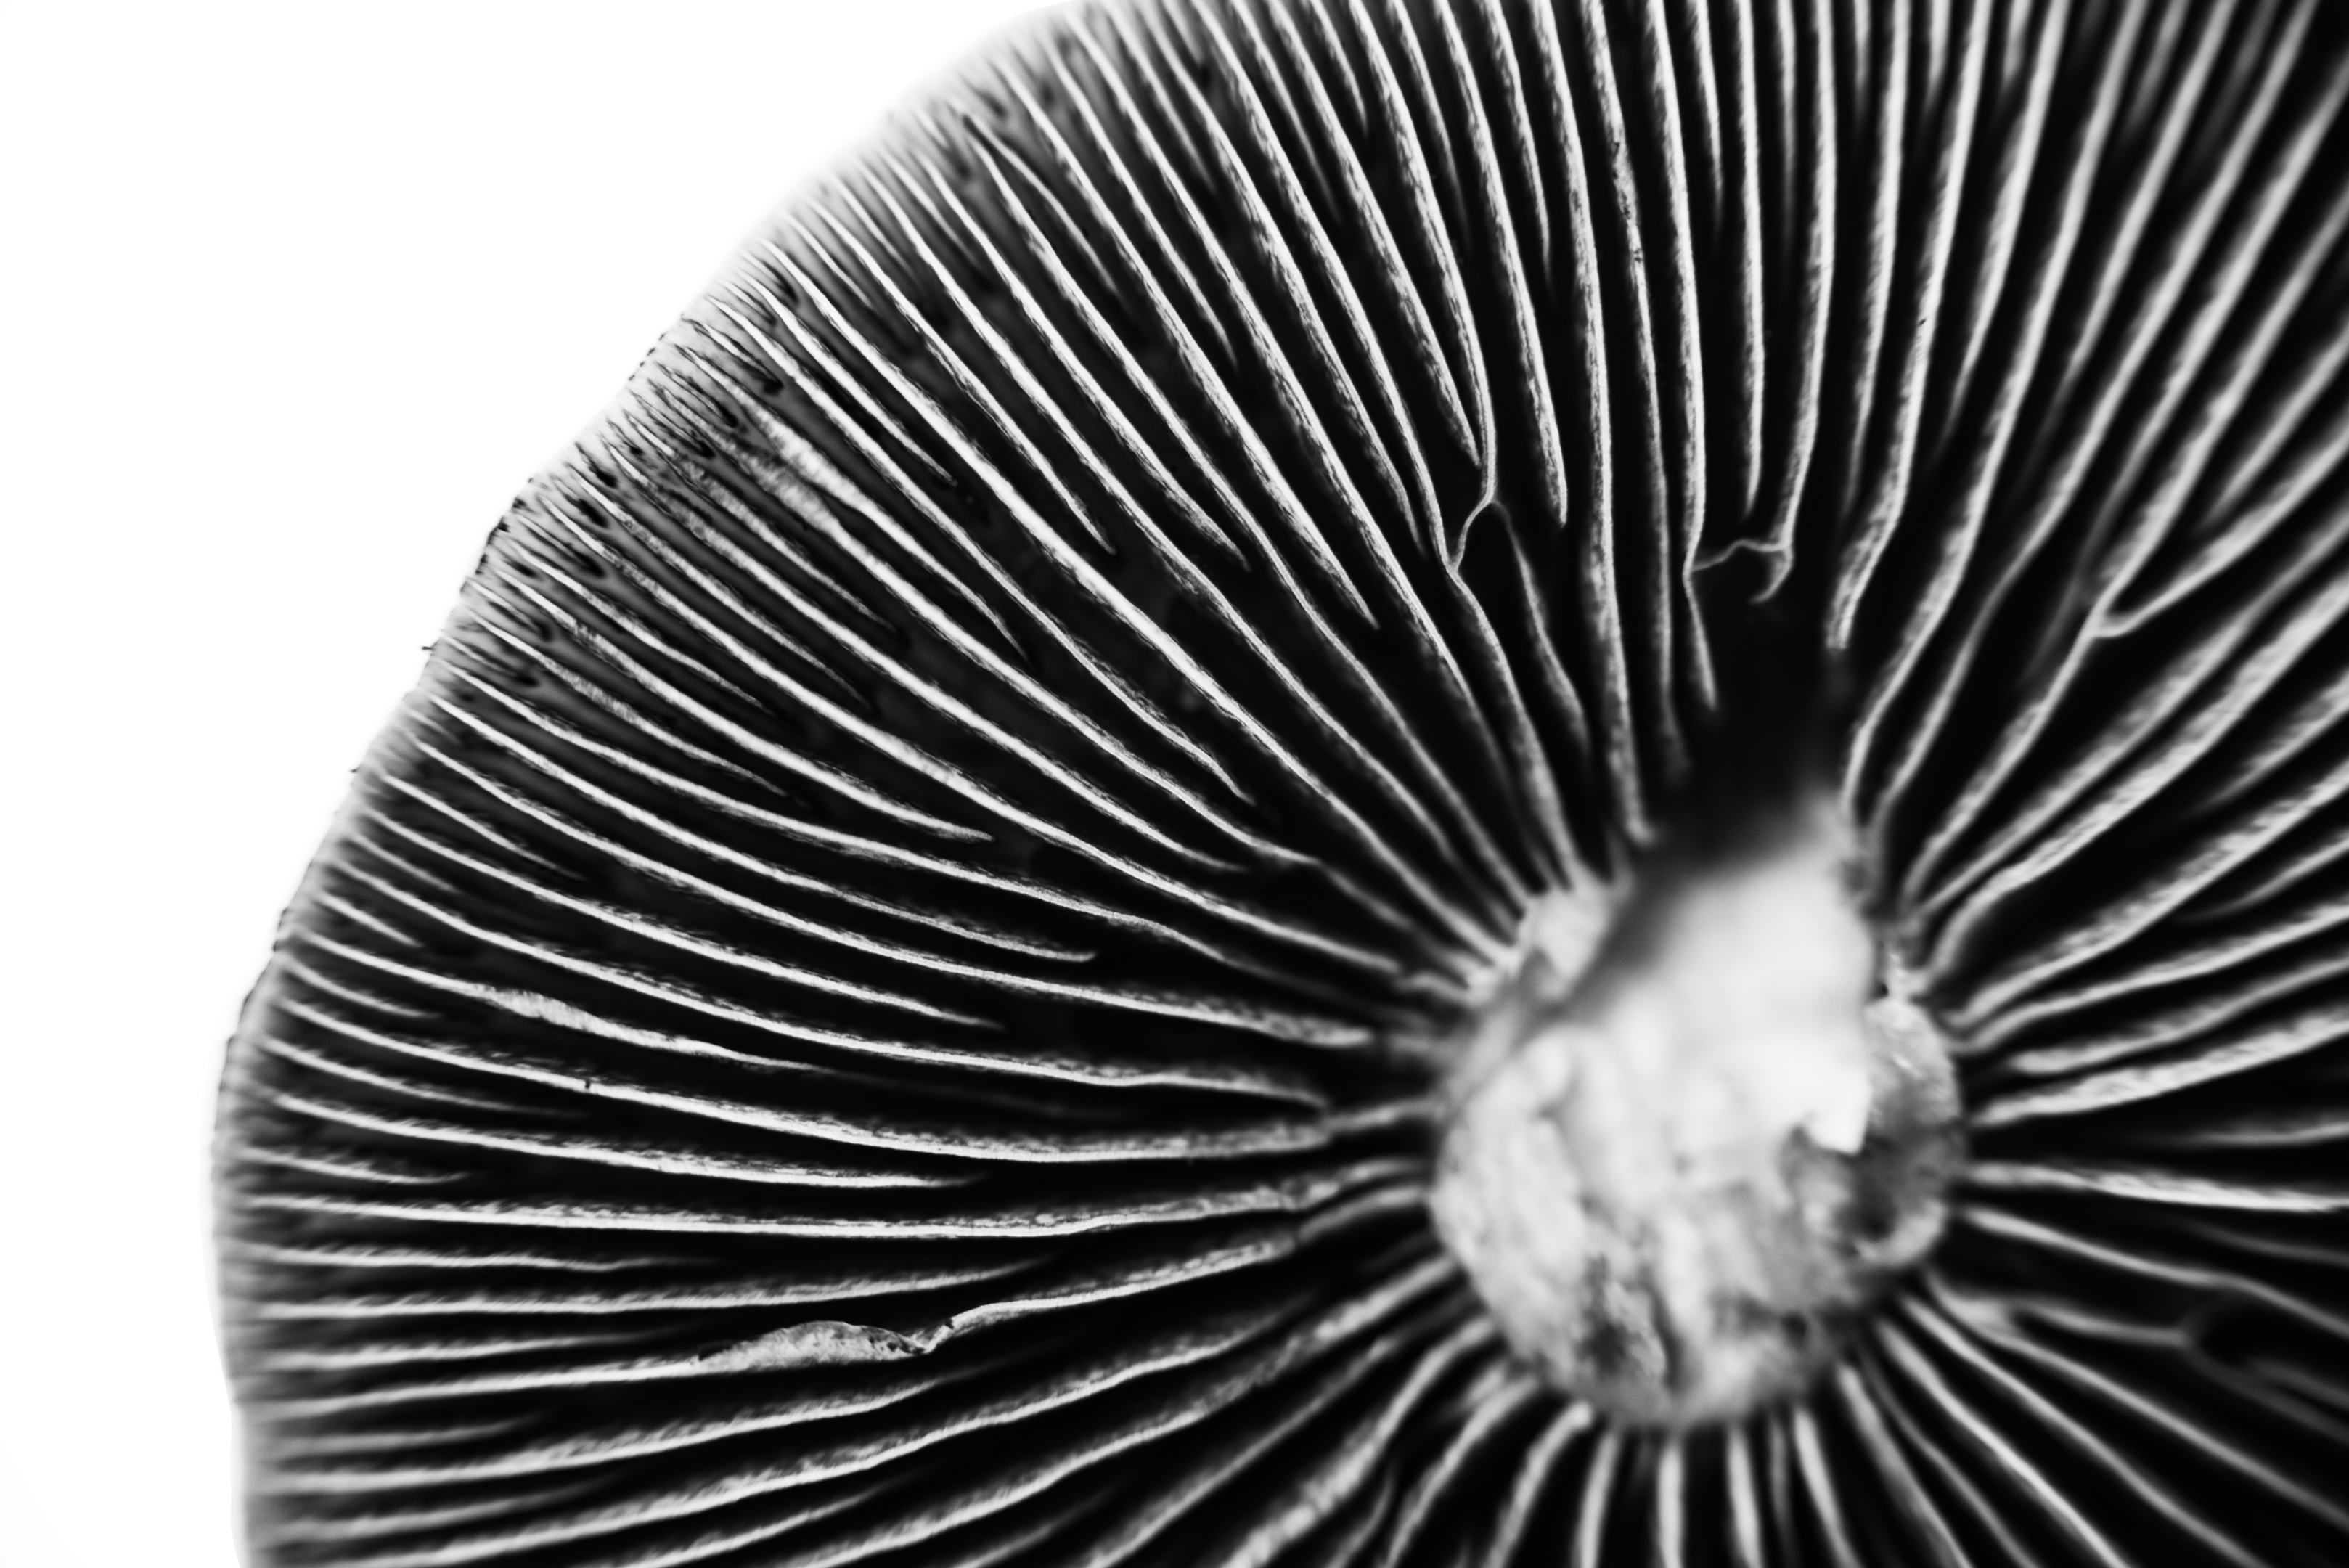 Magic mushrooms (Image source: Adobe Stock)